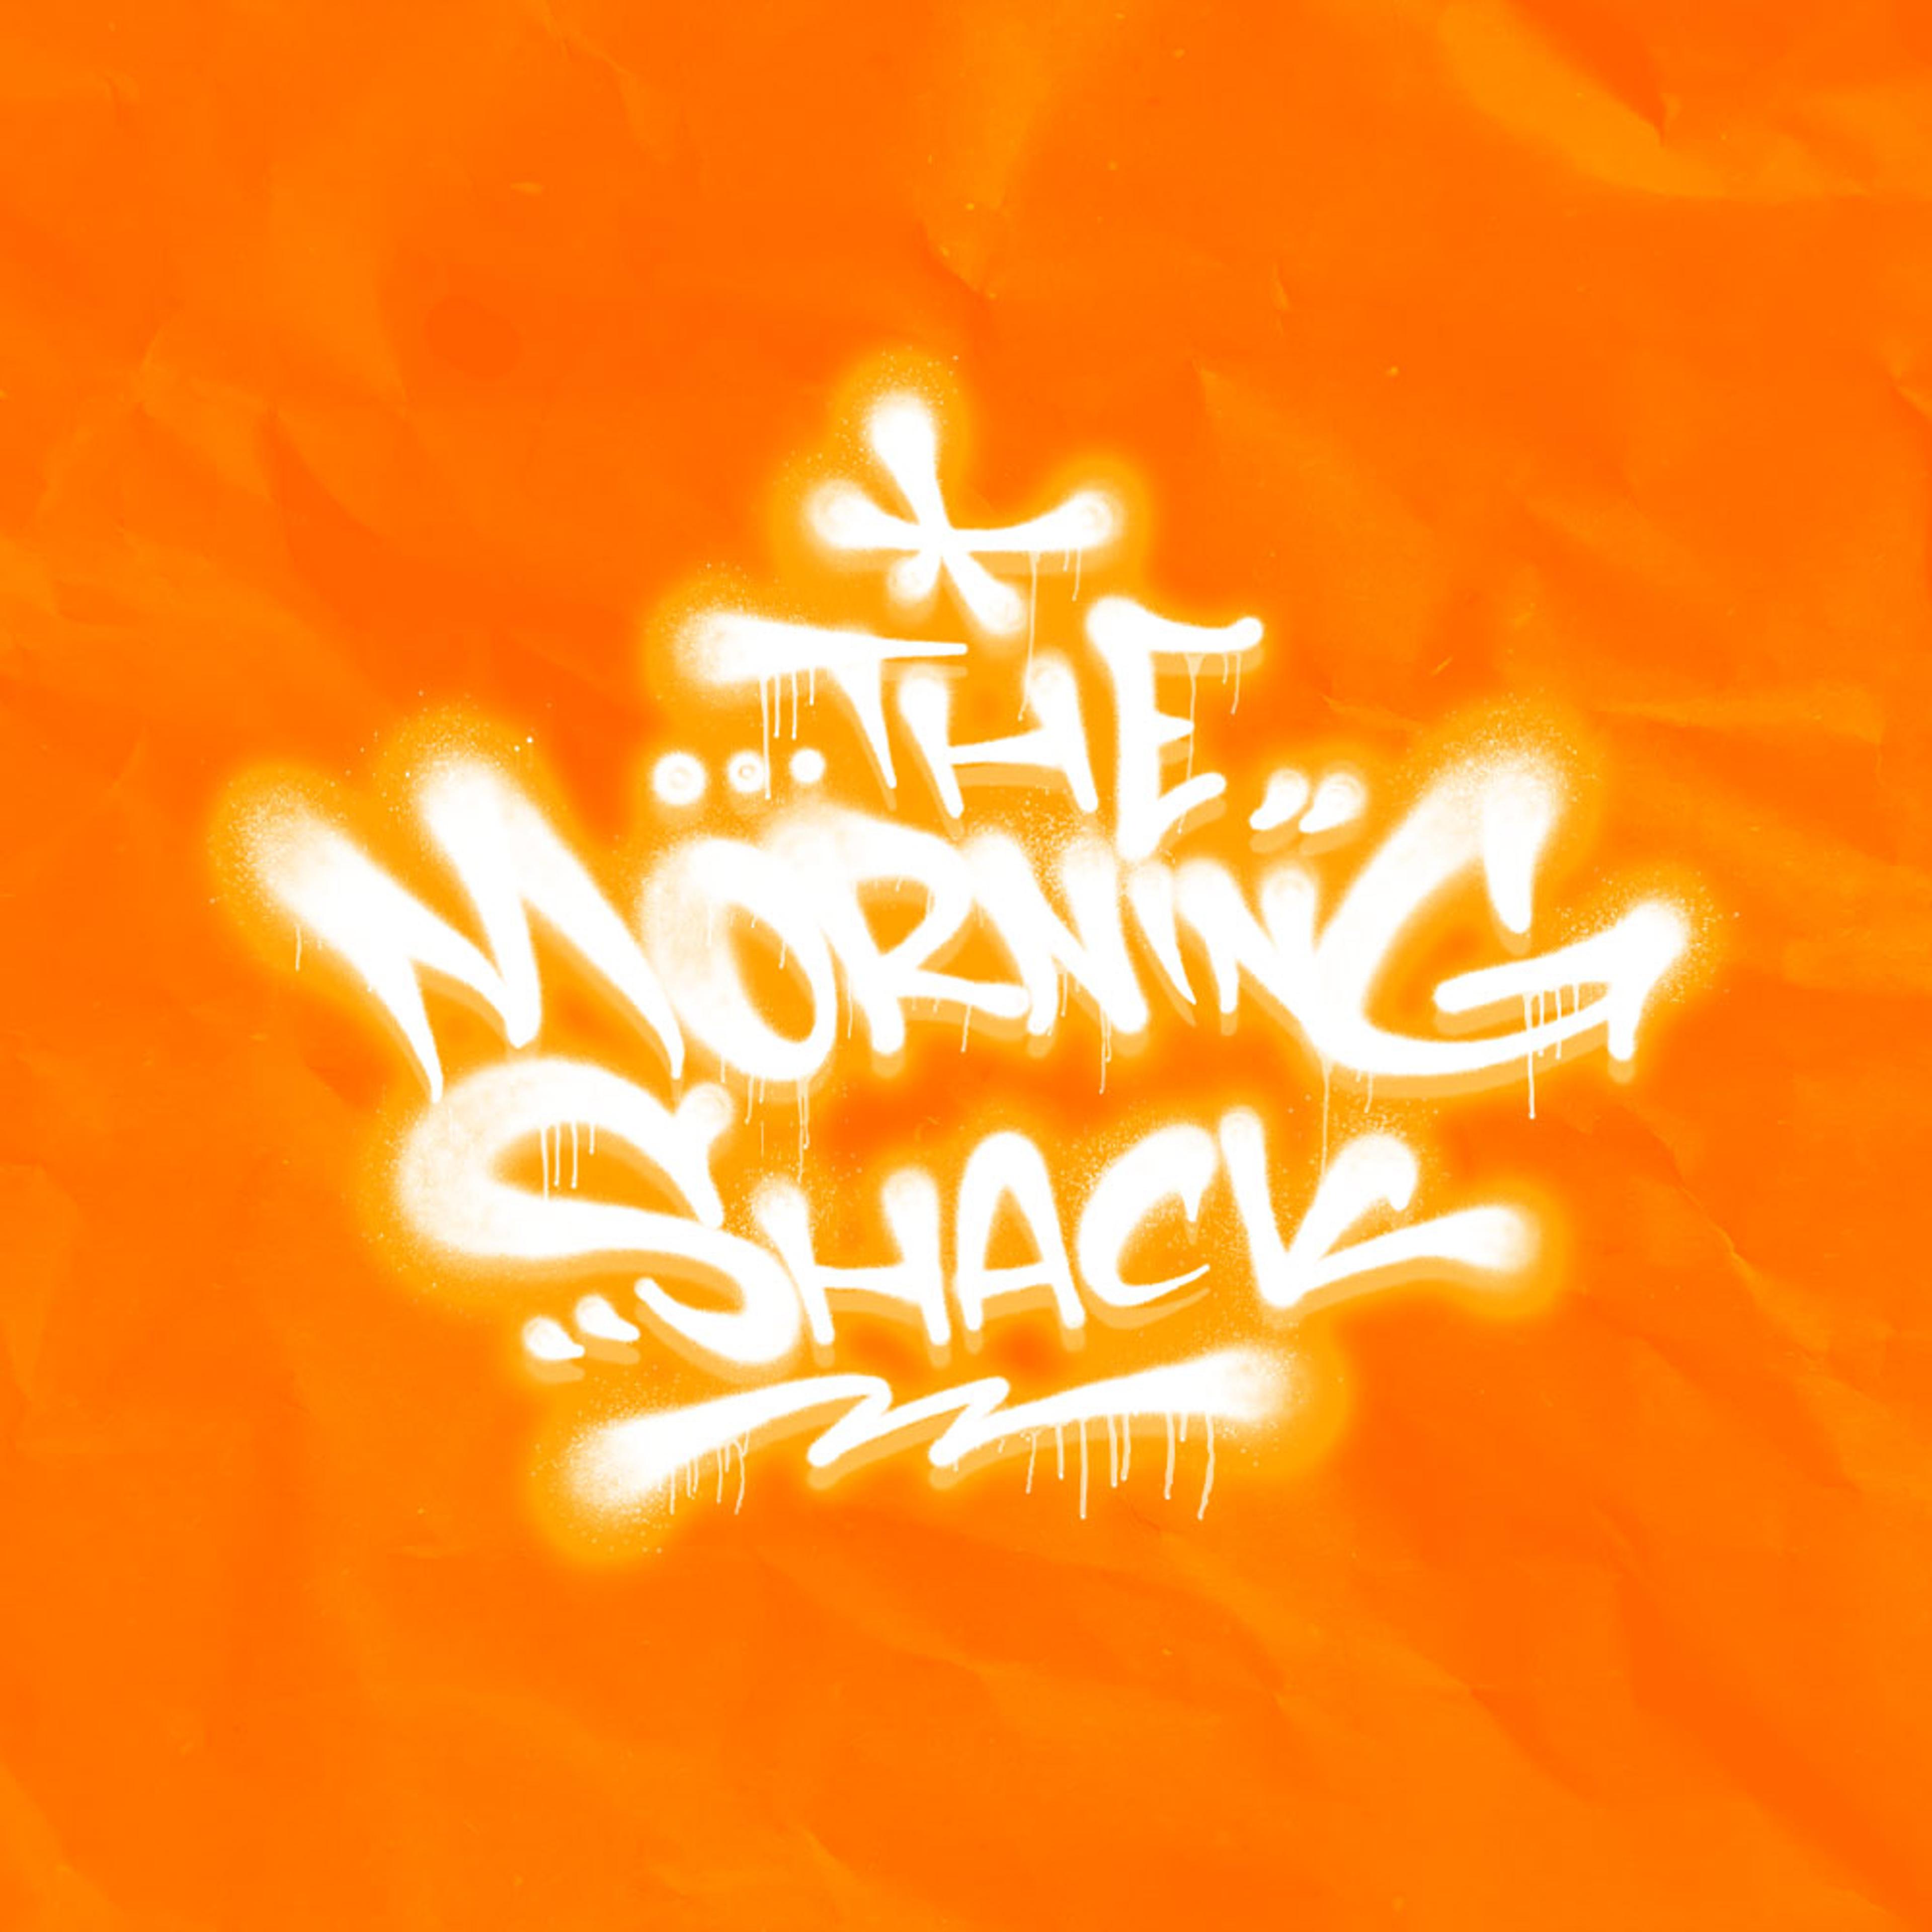 The Morning Shack